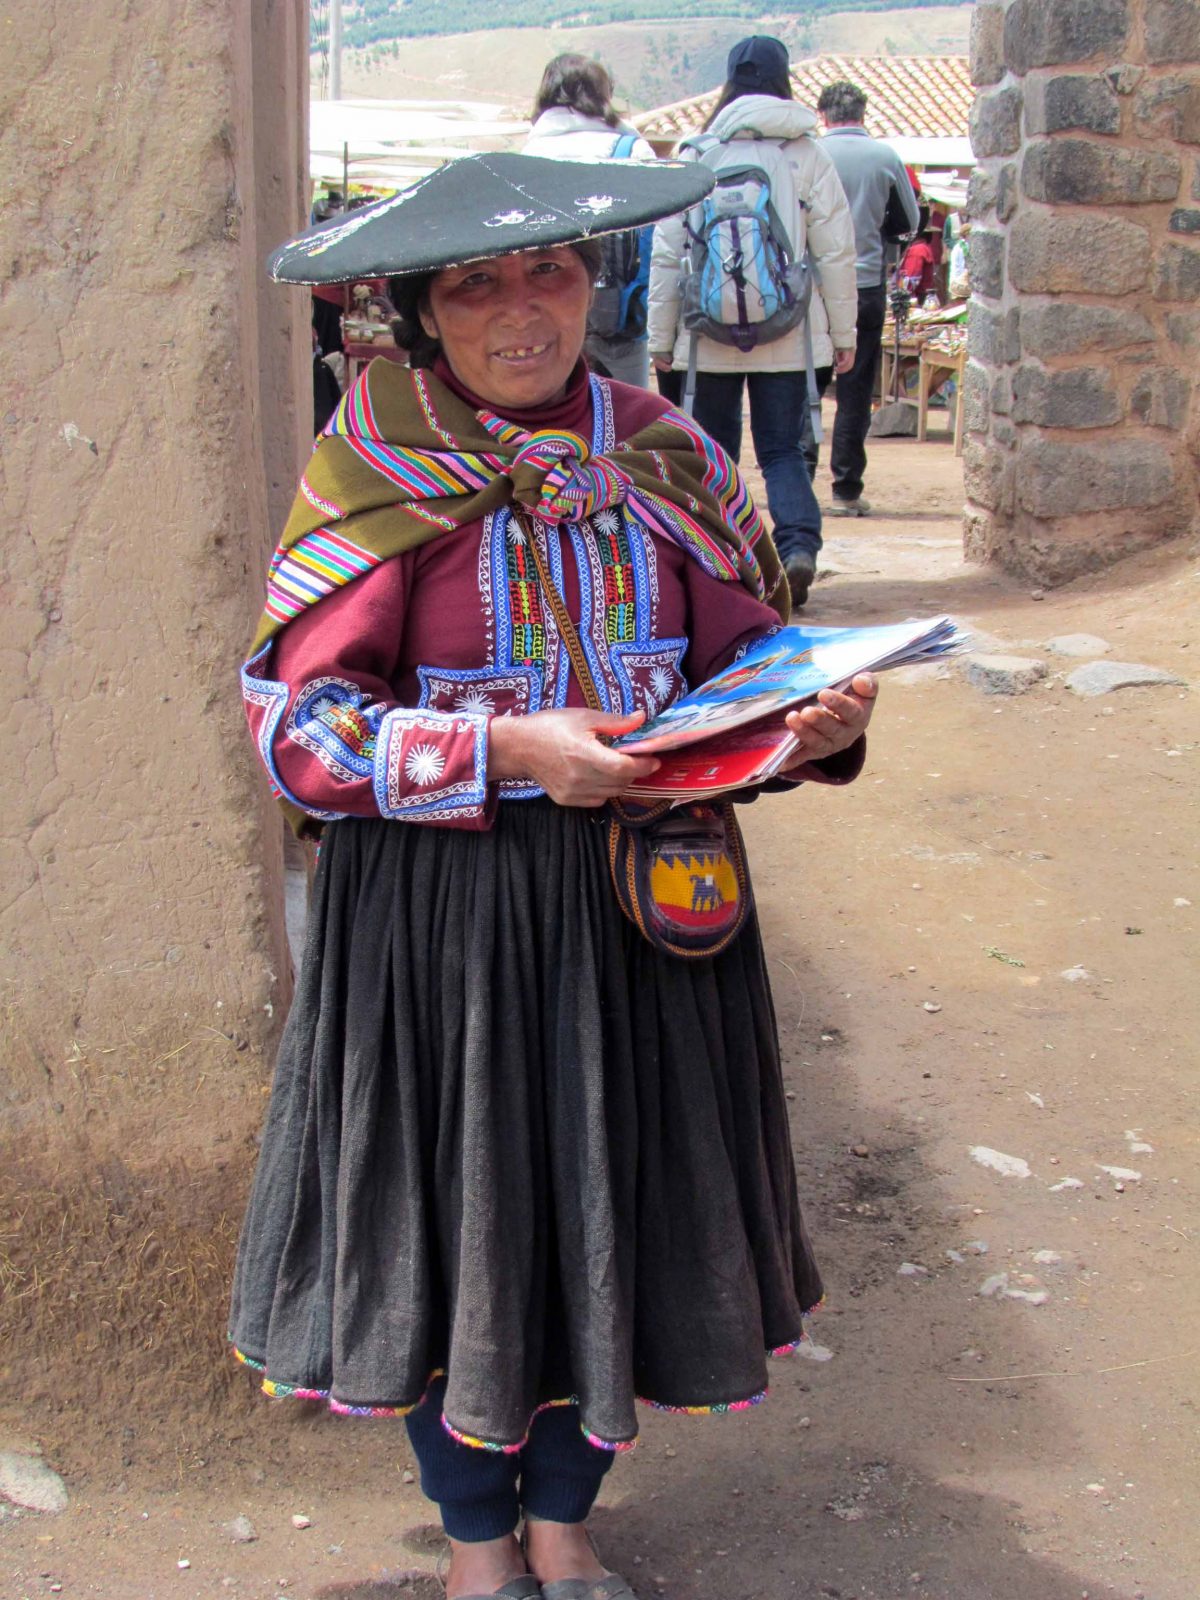 A local woman handing out tourist guides, Peru | ©Angela Drake